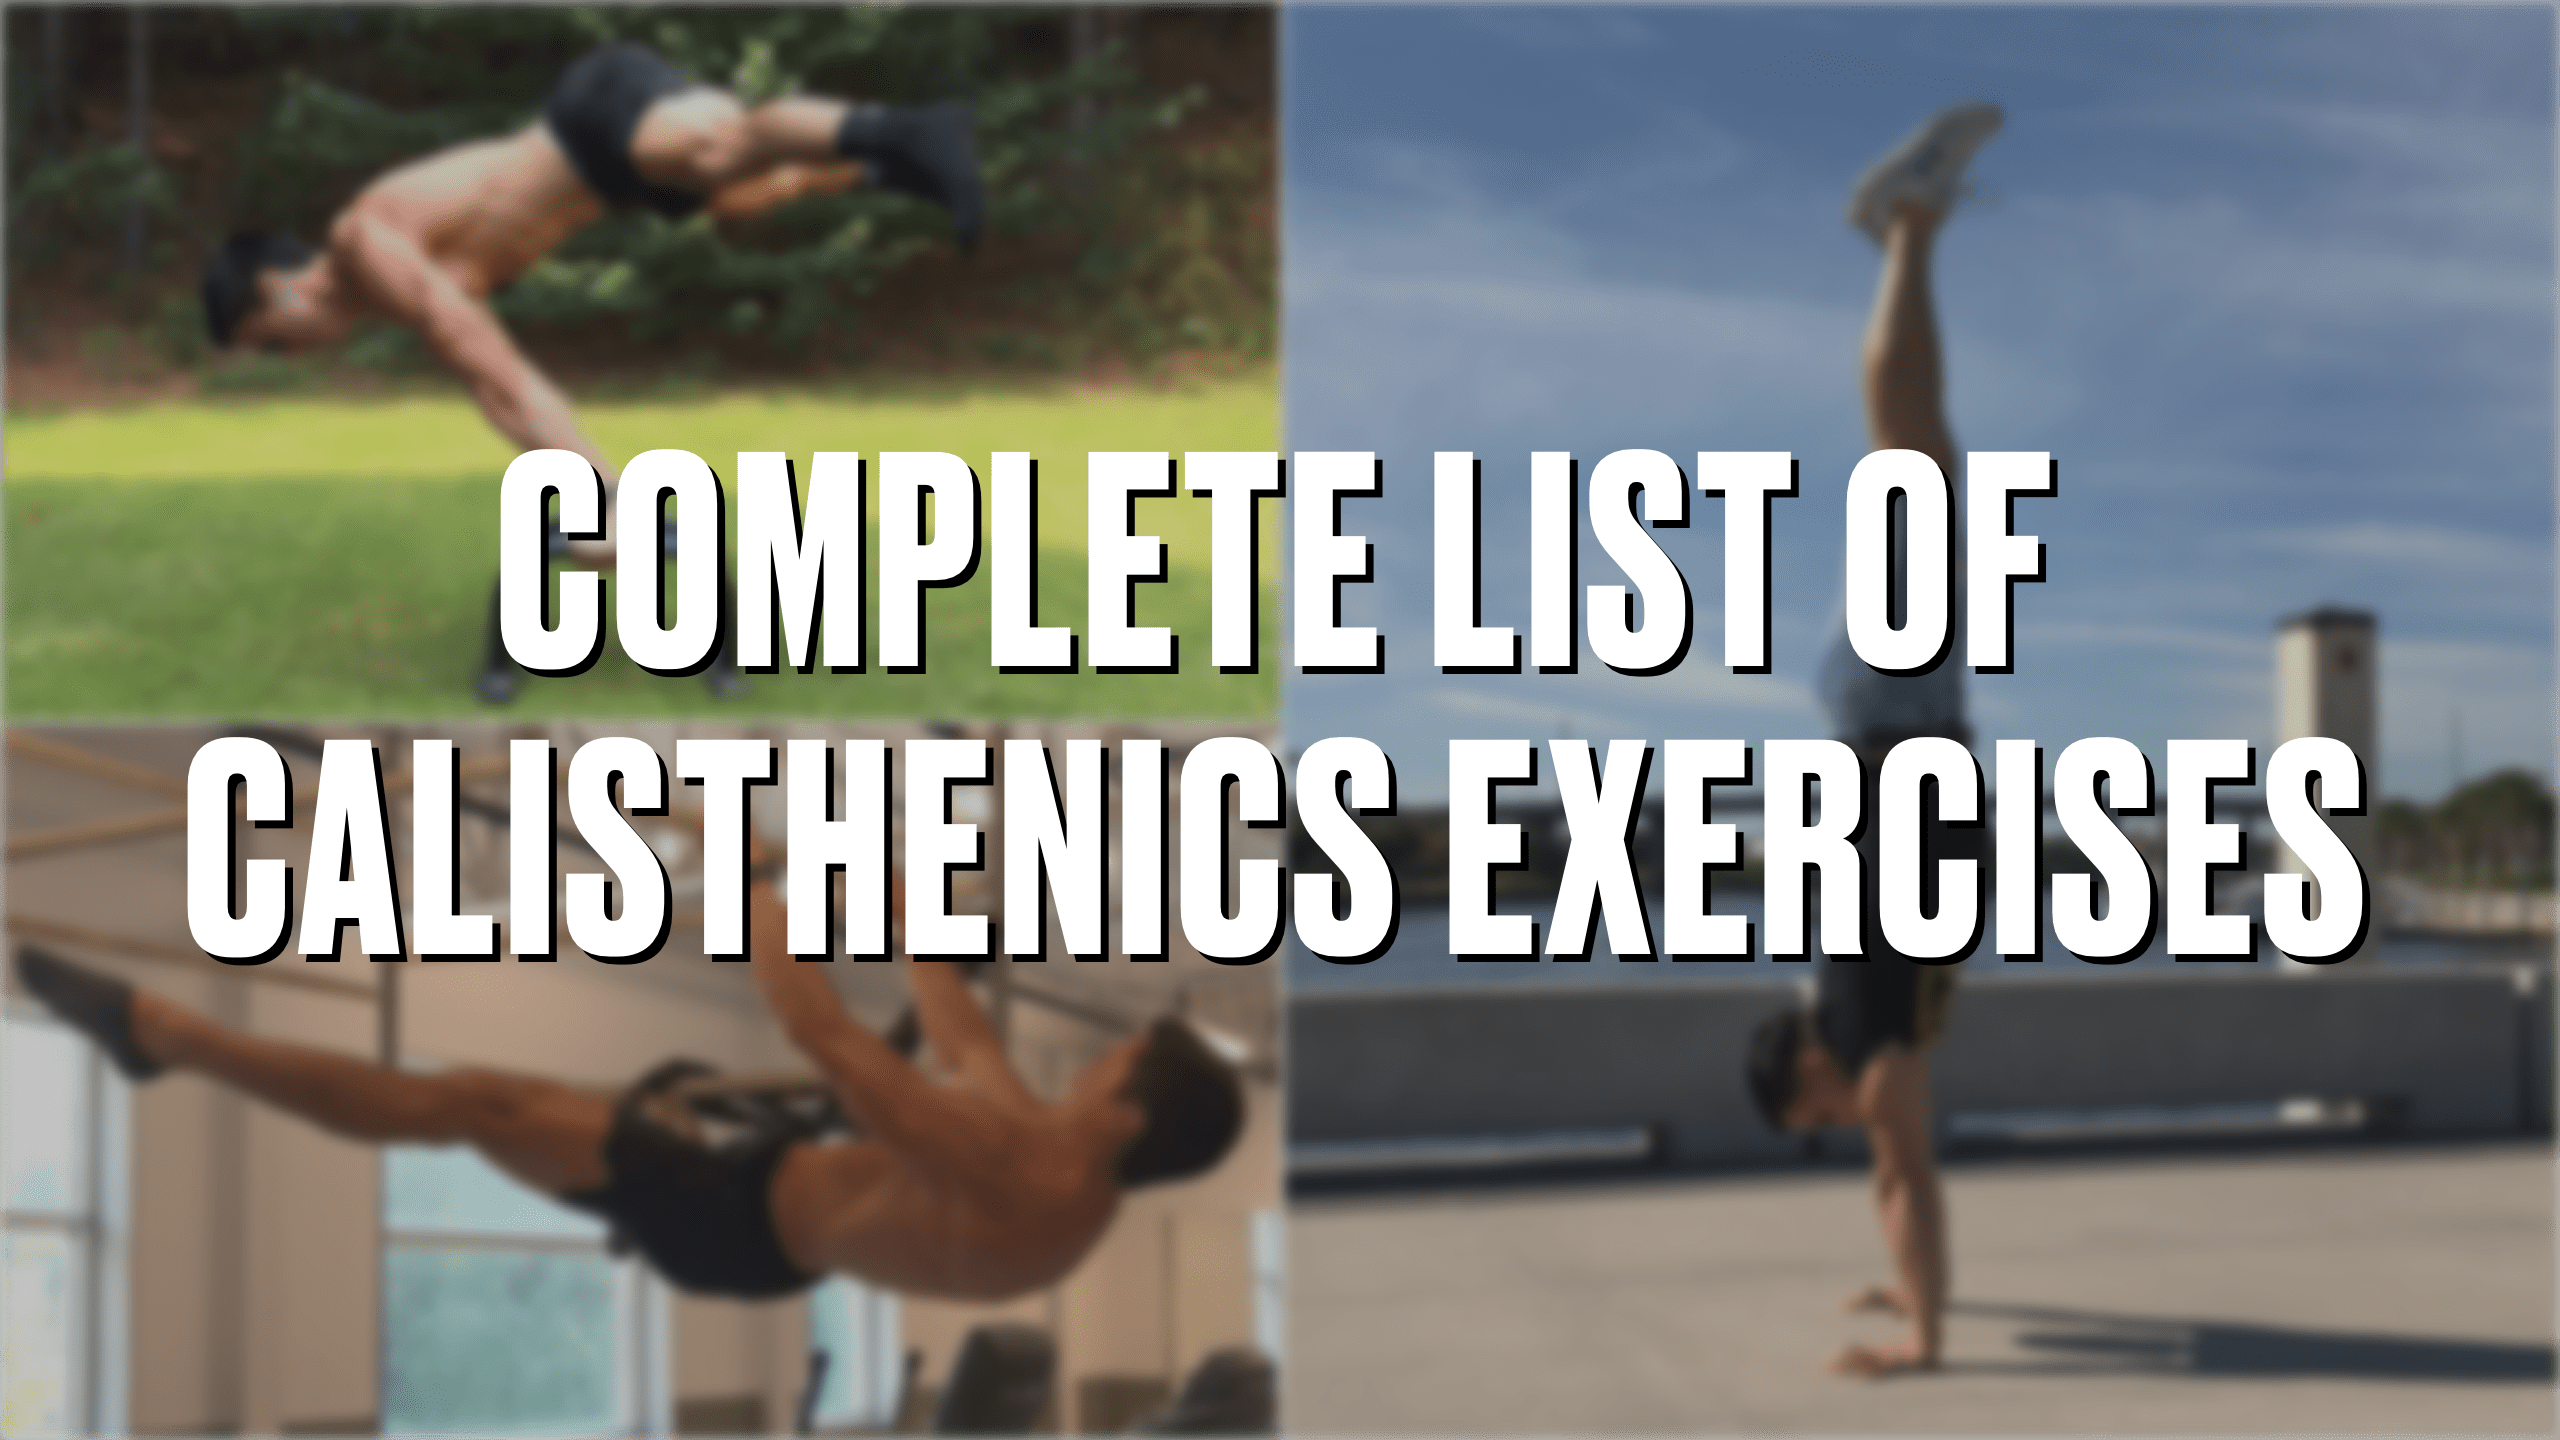 Complete List of Calisthenics Exercises